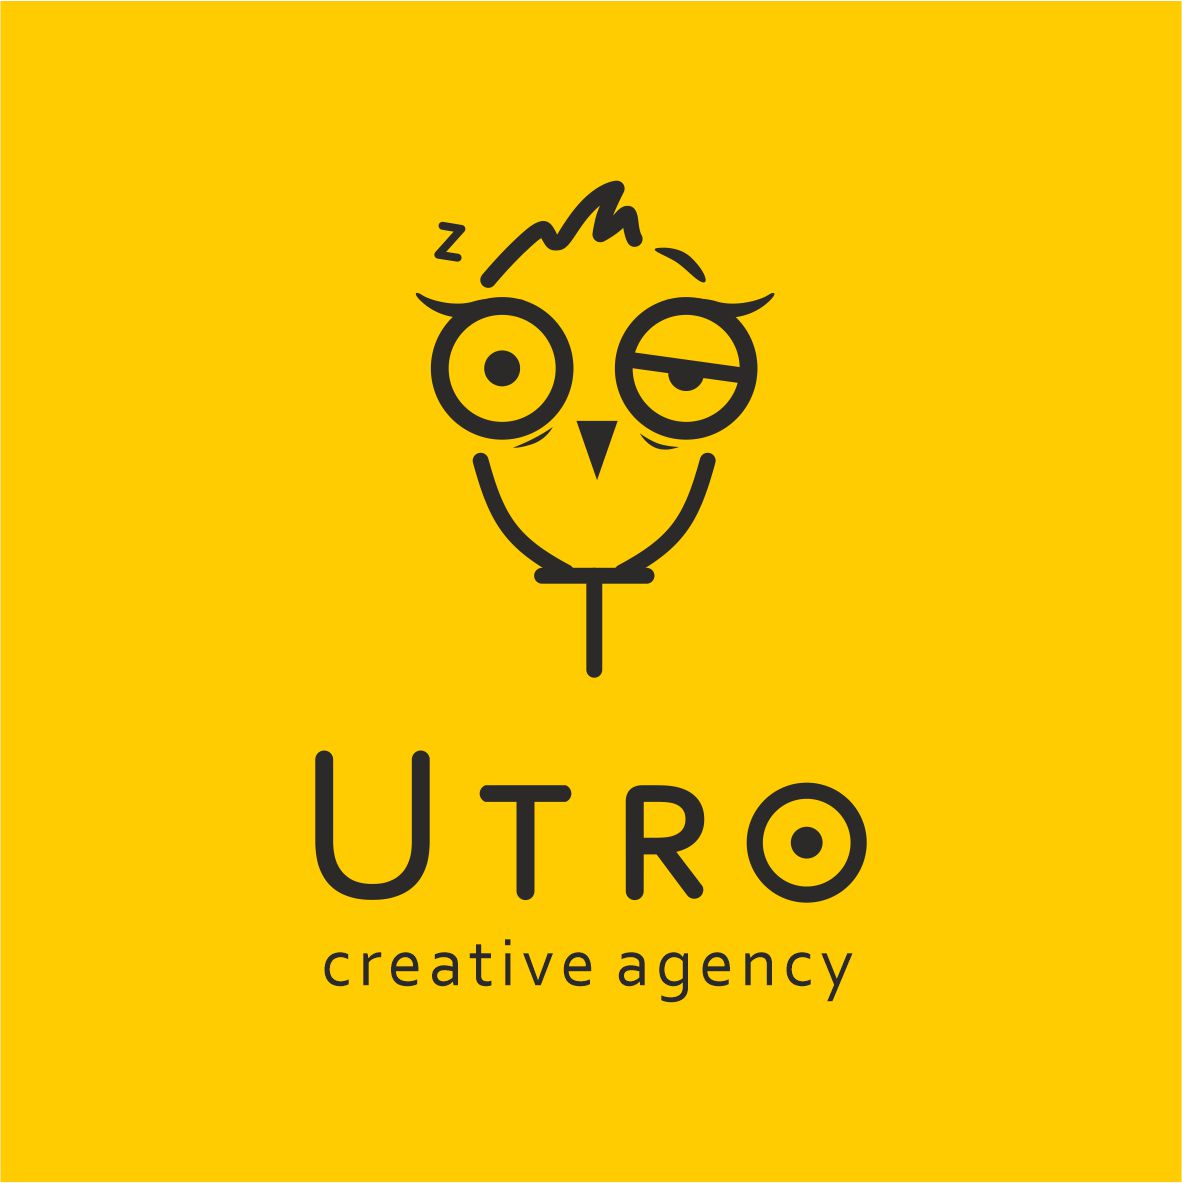 Utro creative agency